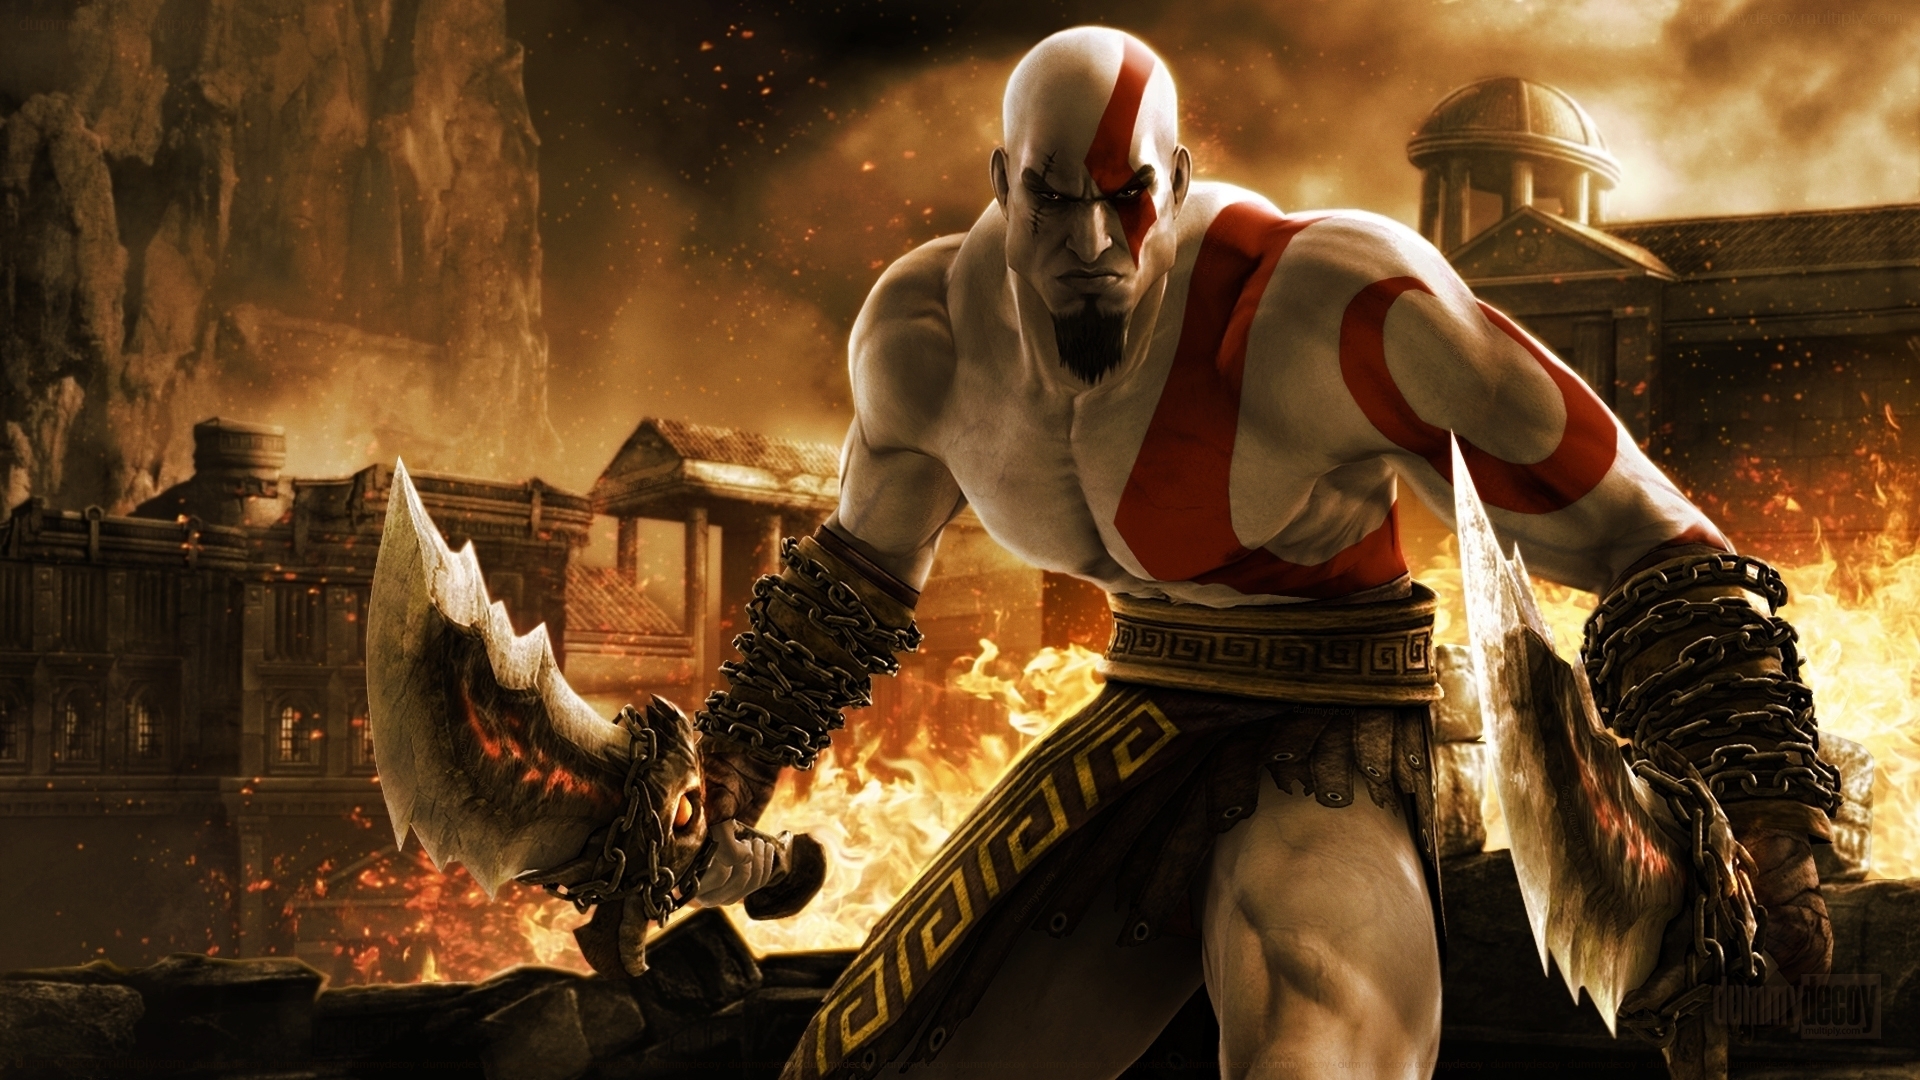 kratos 4K wallpaper for your desktop or mobile screen free